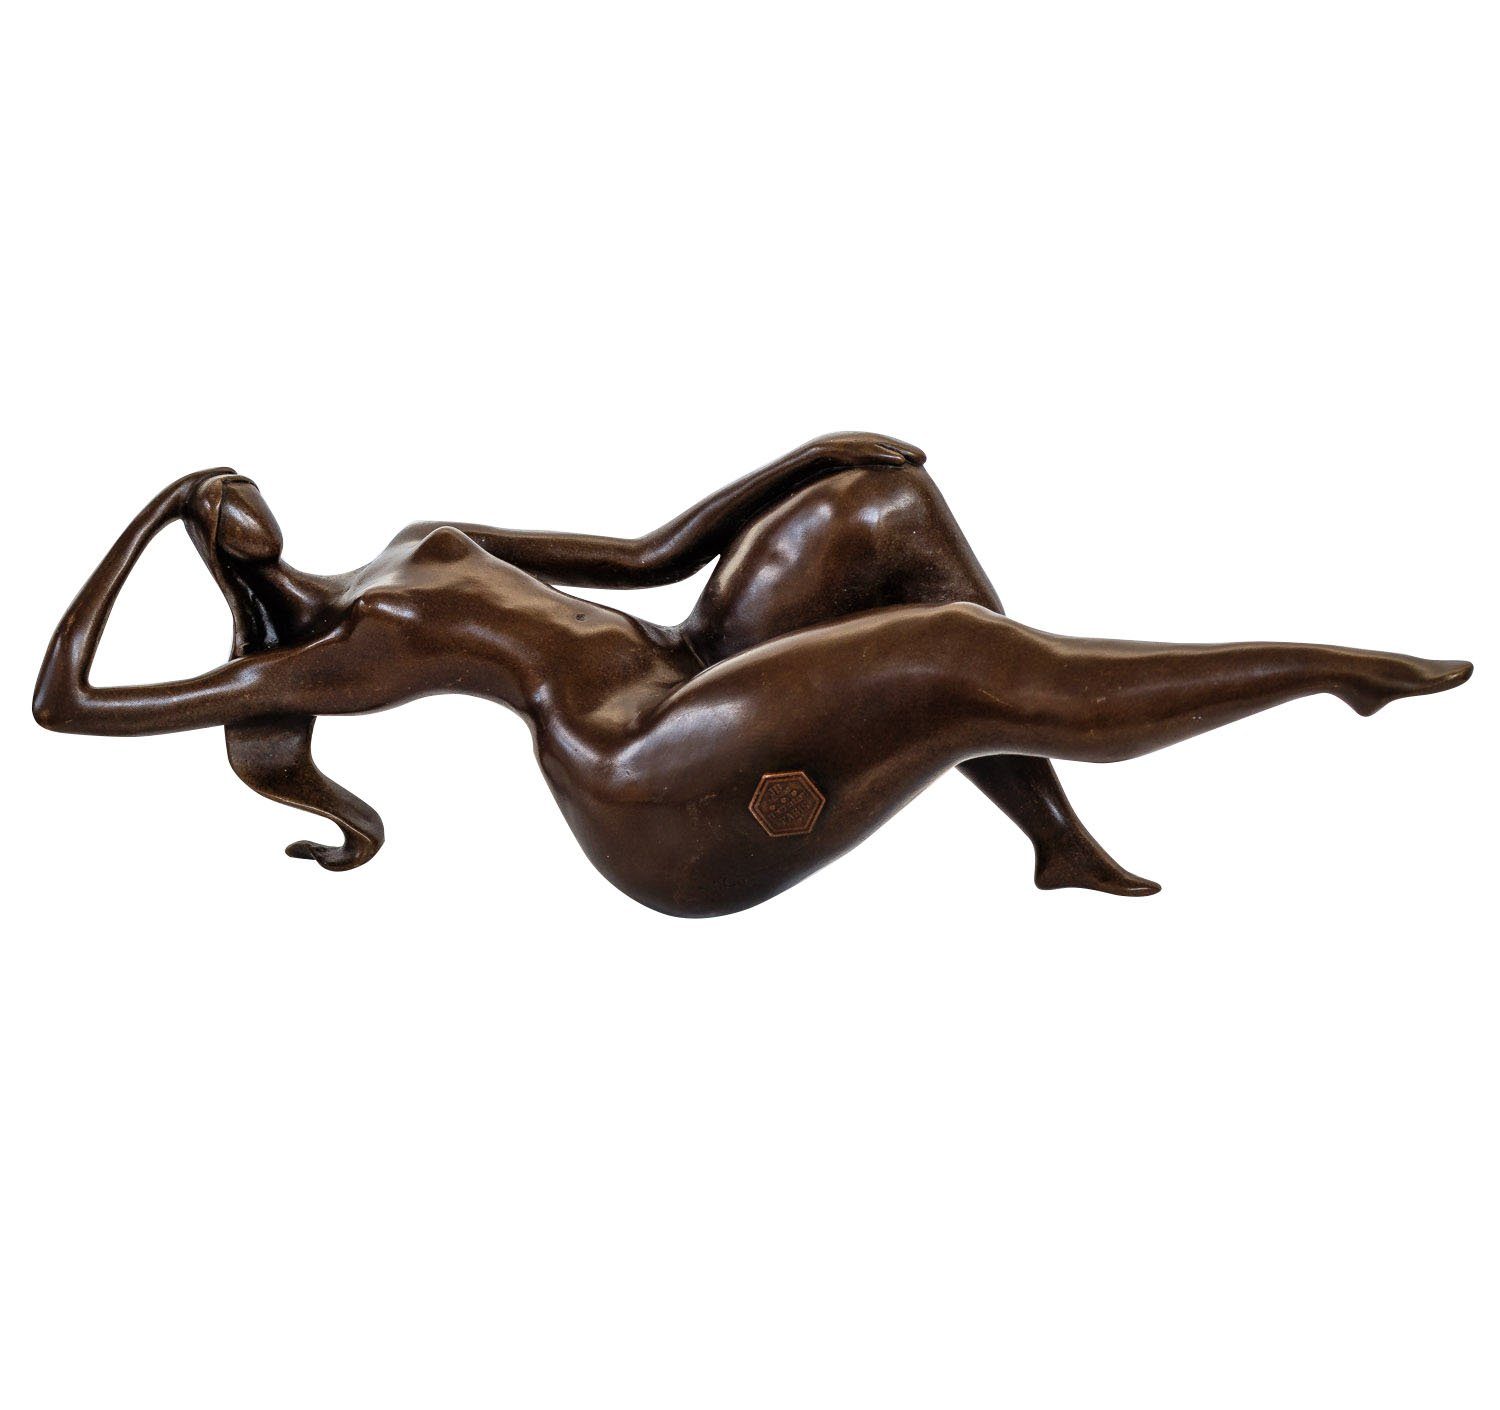 Sta Antik-Stil Skulptur Kunst Bronzeskulptur Aubaho Figur erotische Frau Bronze Erotik